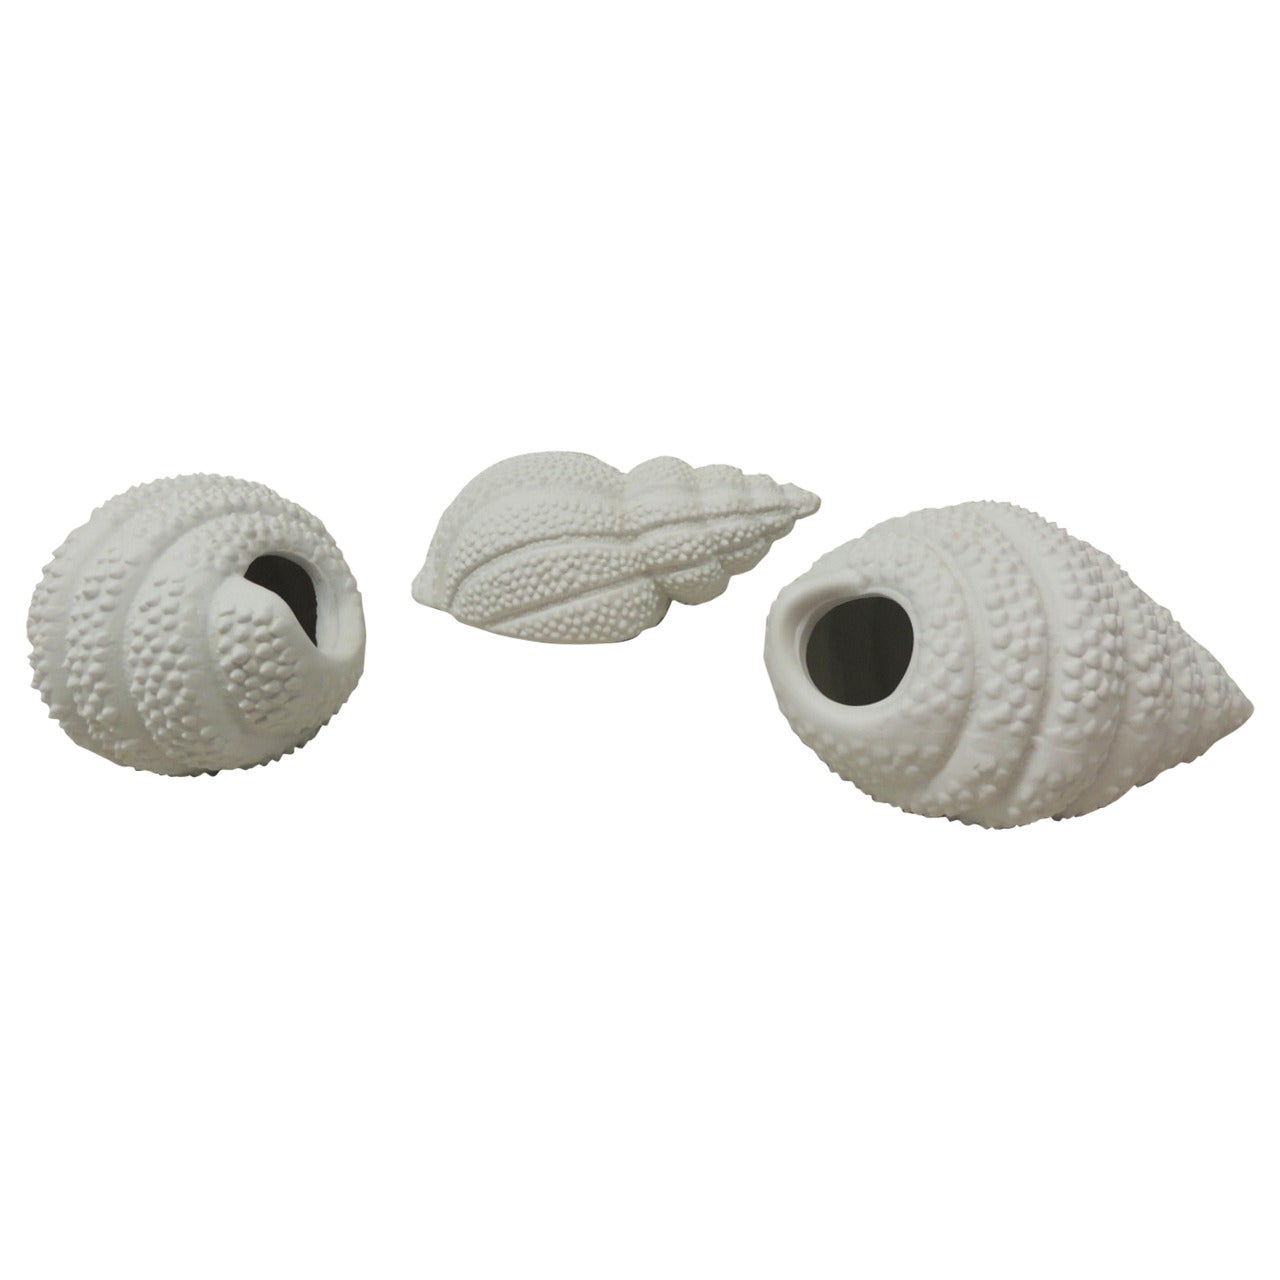 Set of Three Bisque Porcelain Sea Snail Shells